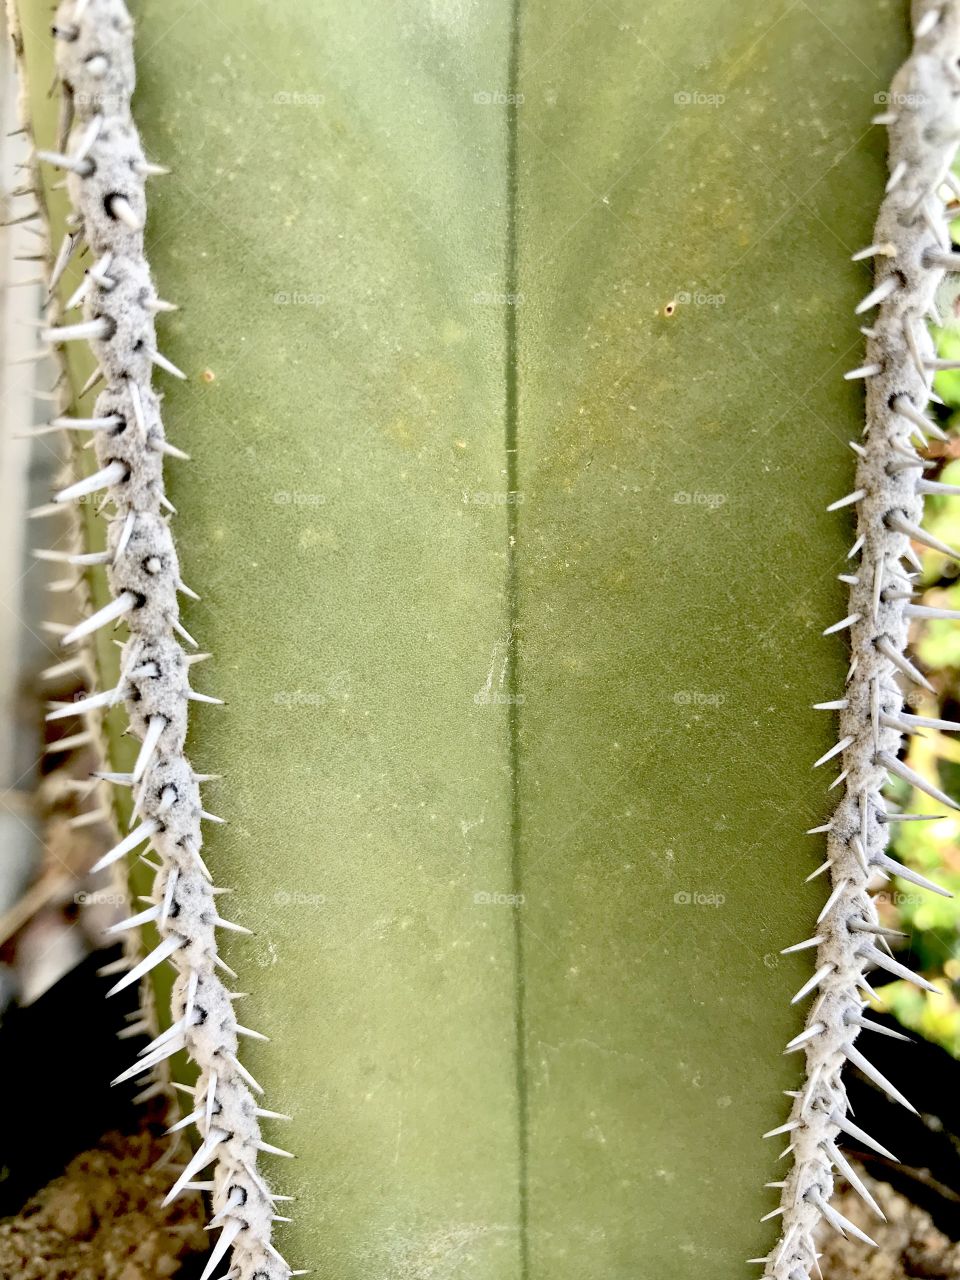 Cactuse